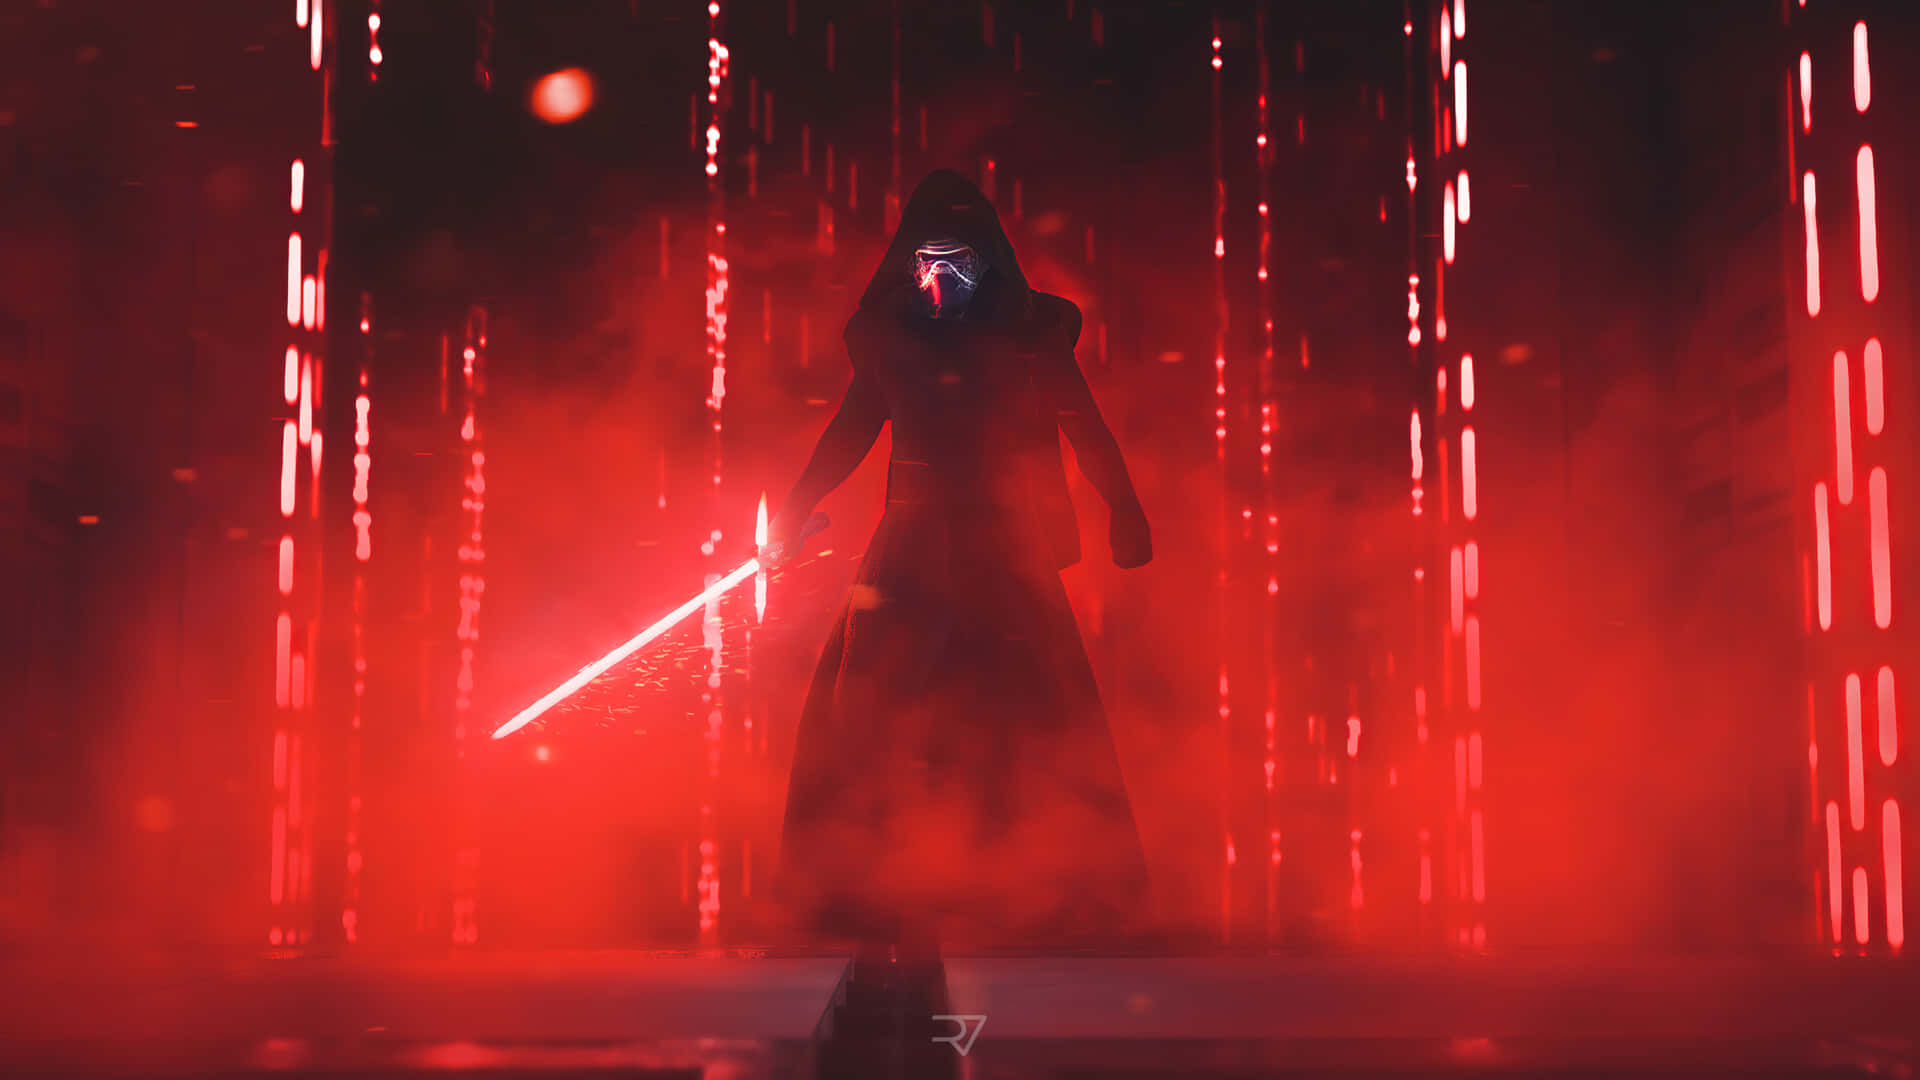 Sith Lord Kylo Ren looking menacing in 4K. Wallpaper